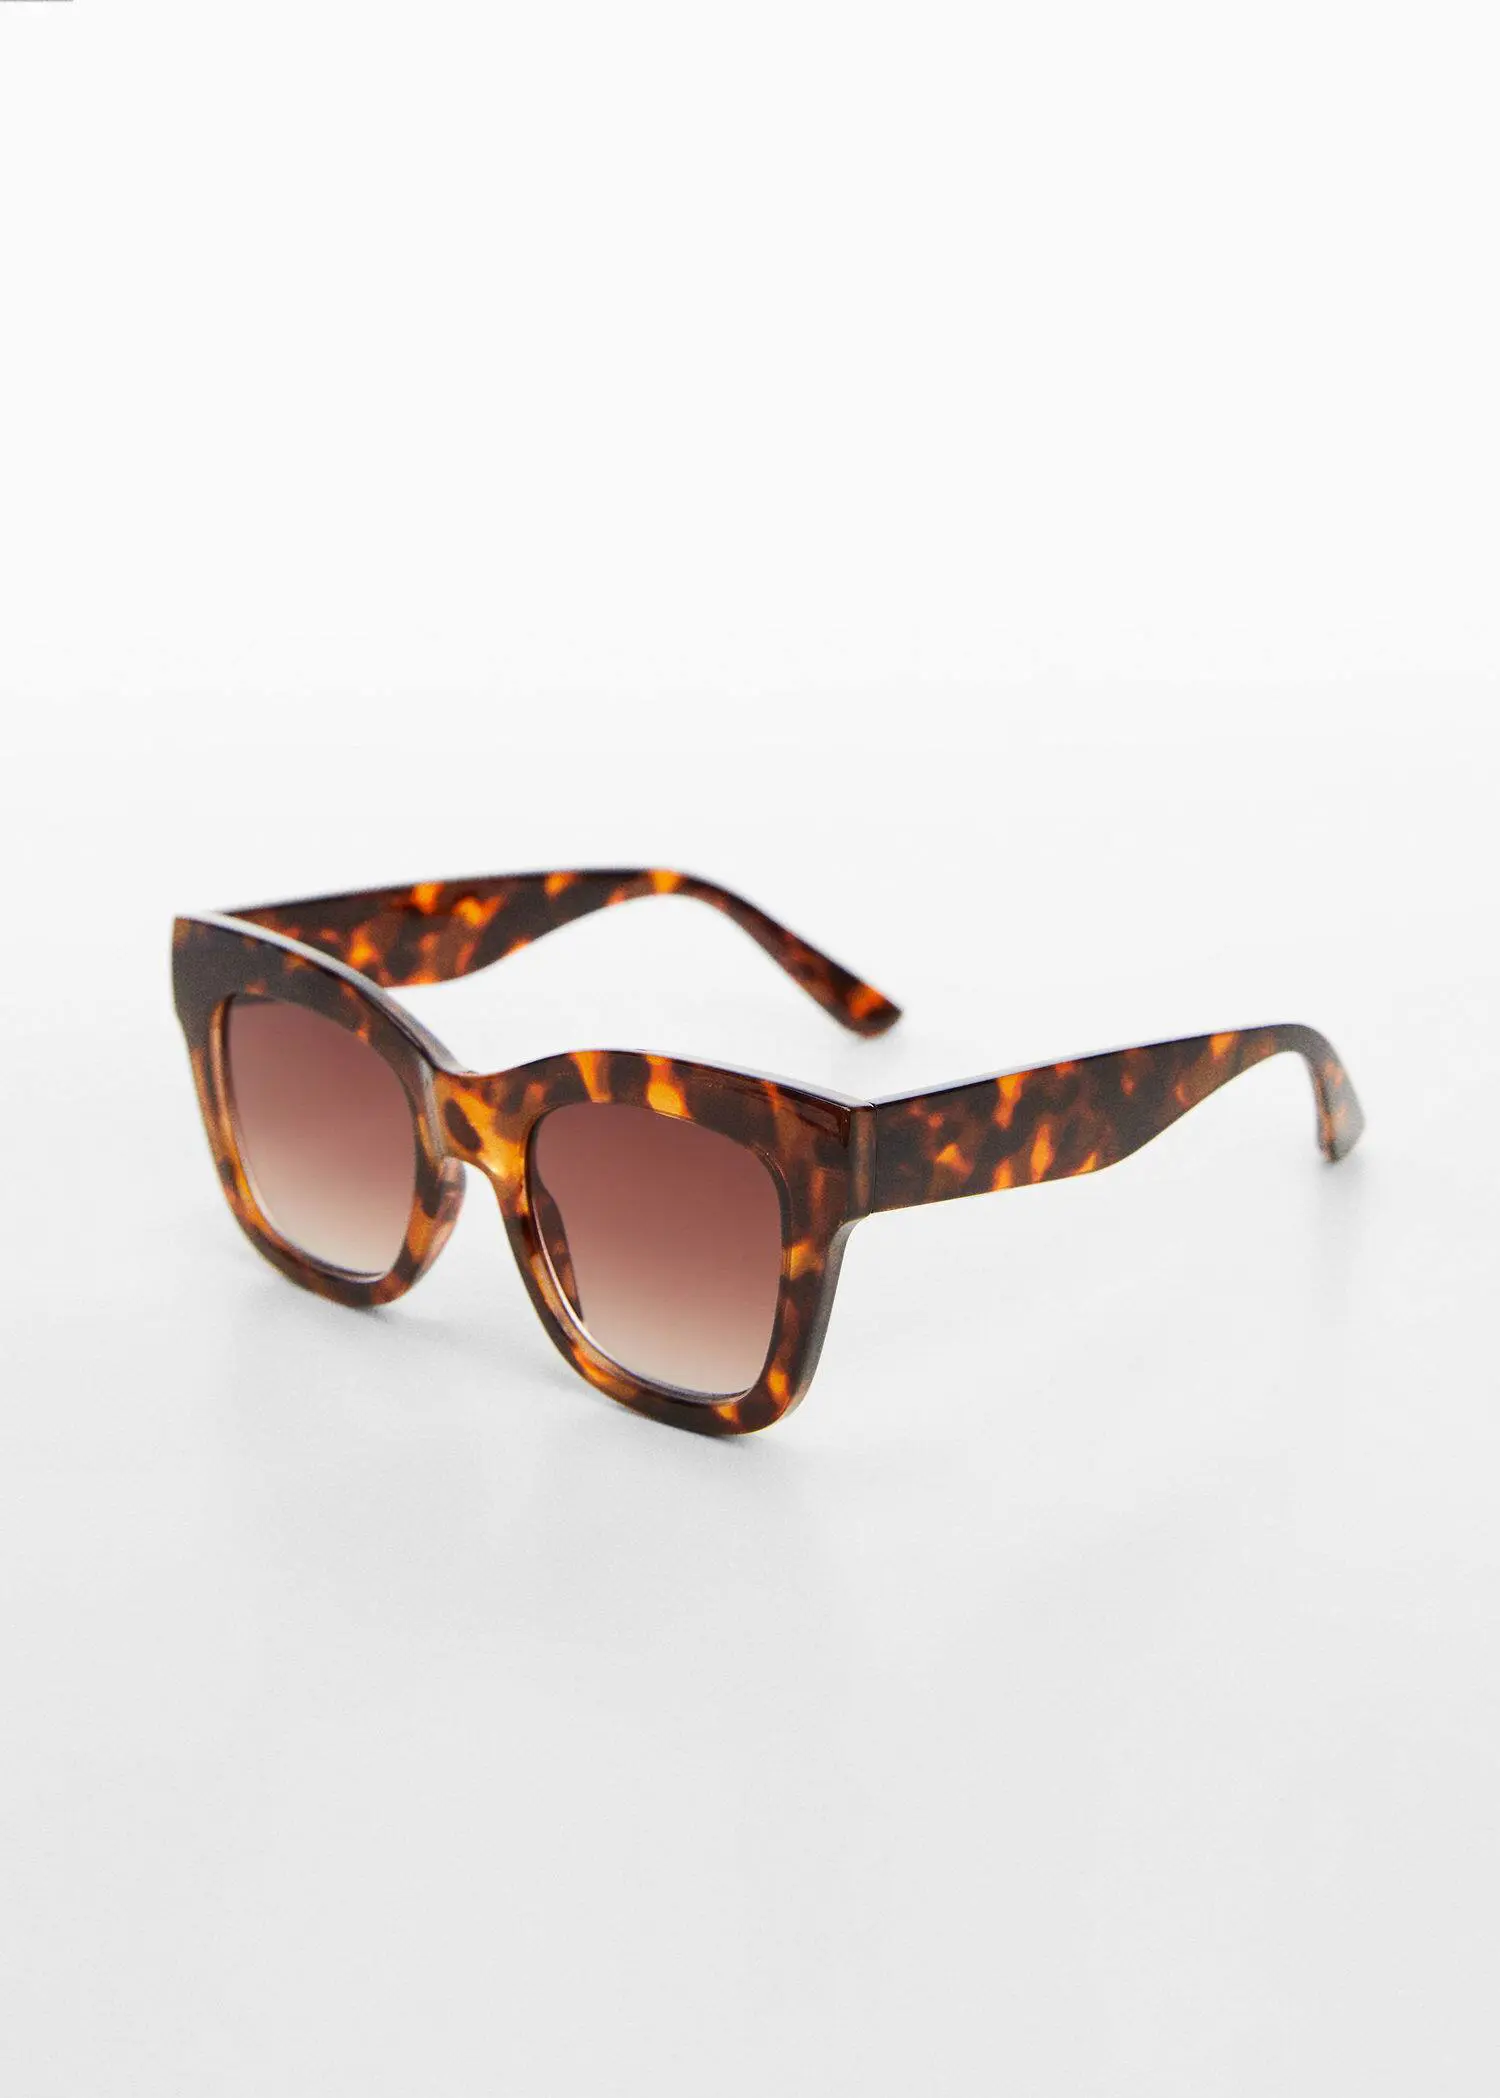 Mango Squared frame sunglasses. 1